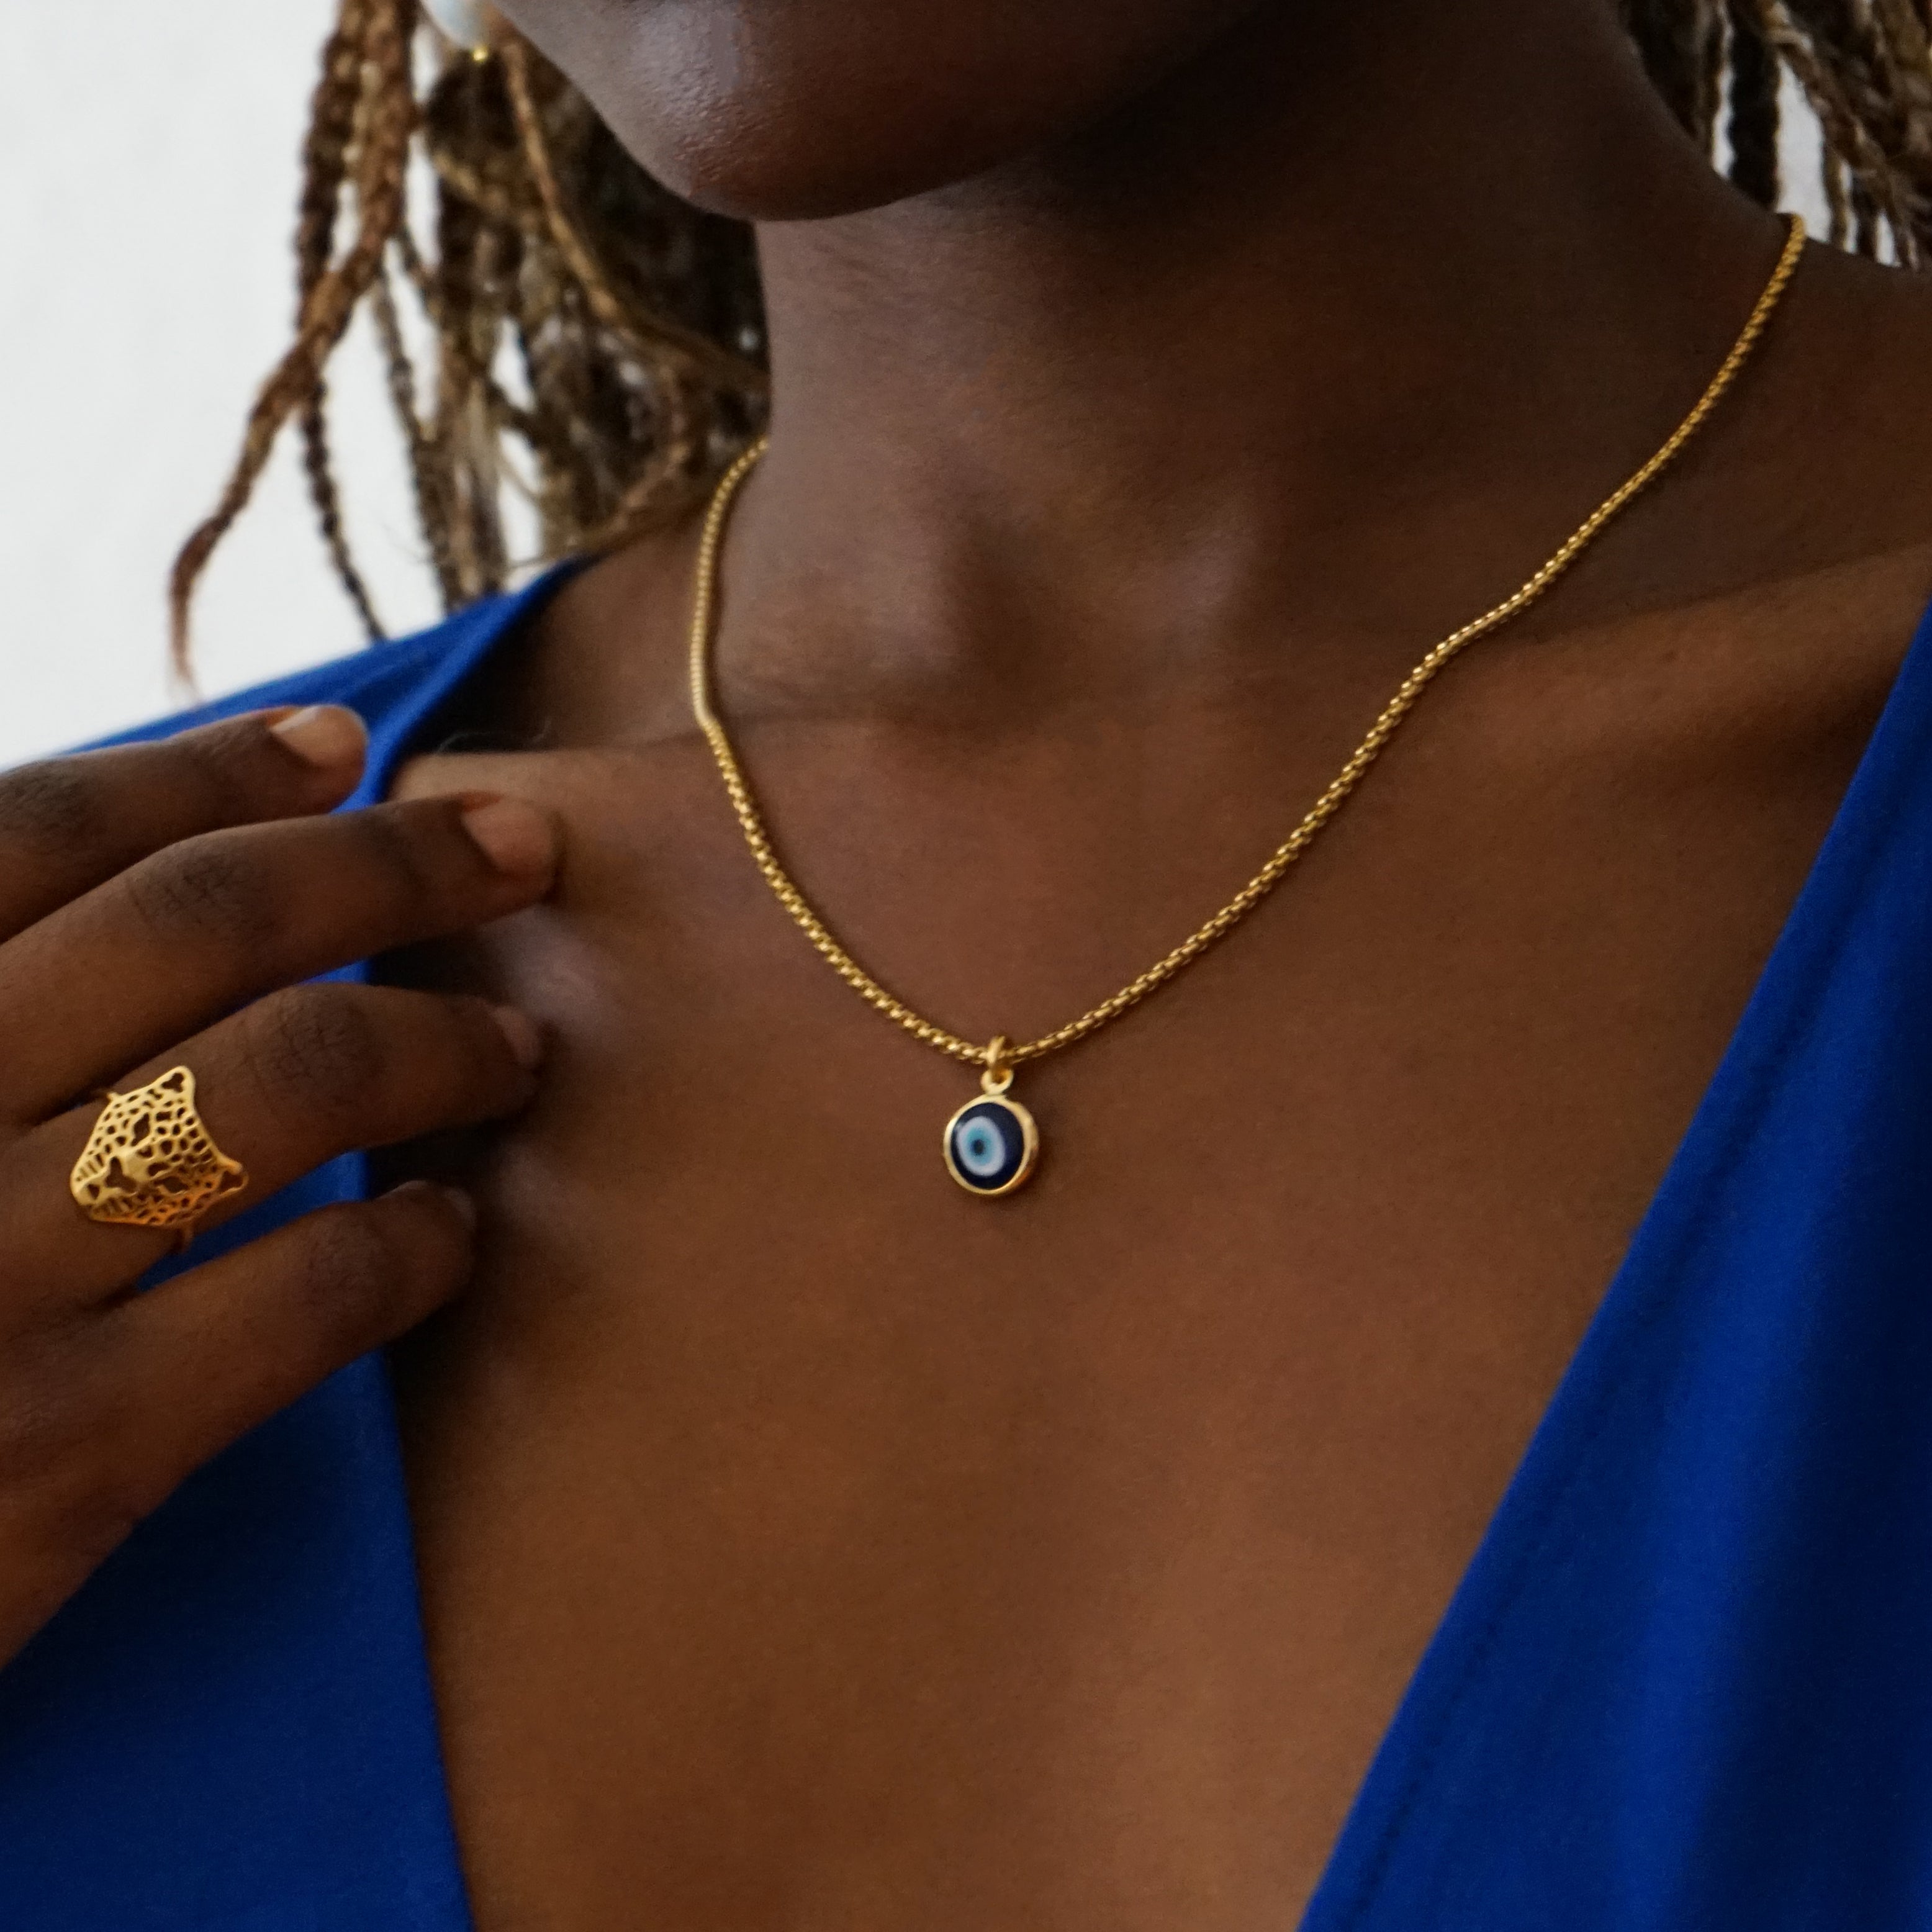 Buy Evil Eye Diamond Pendant Necklace Online in India | Rose